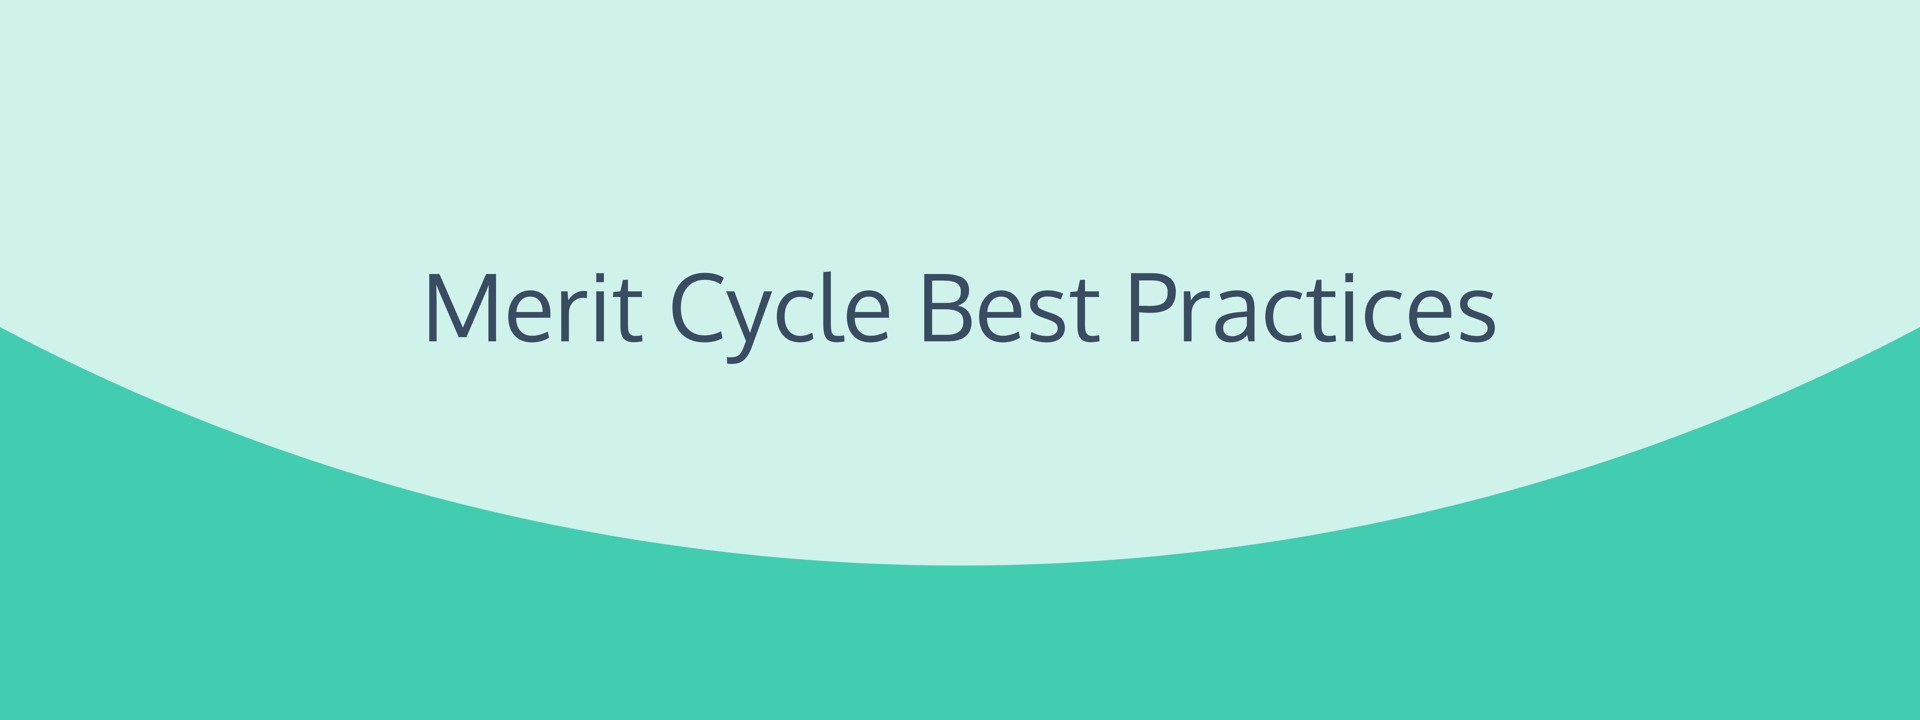 Merit Cycle Best Practices